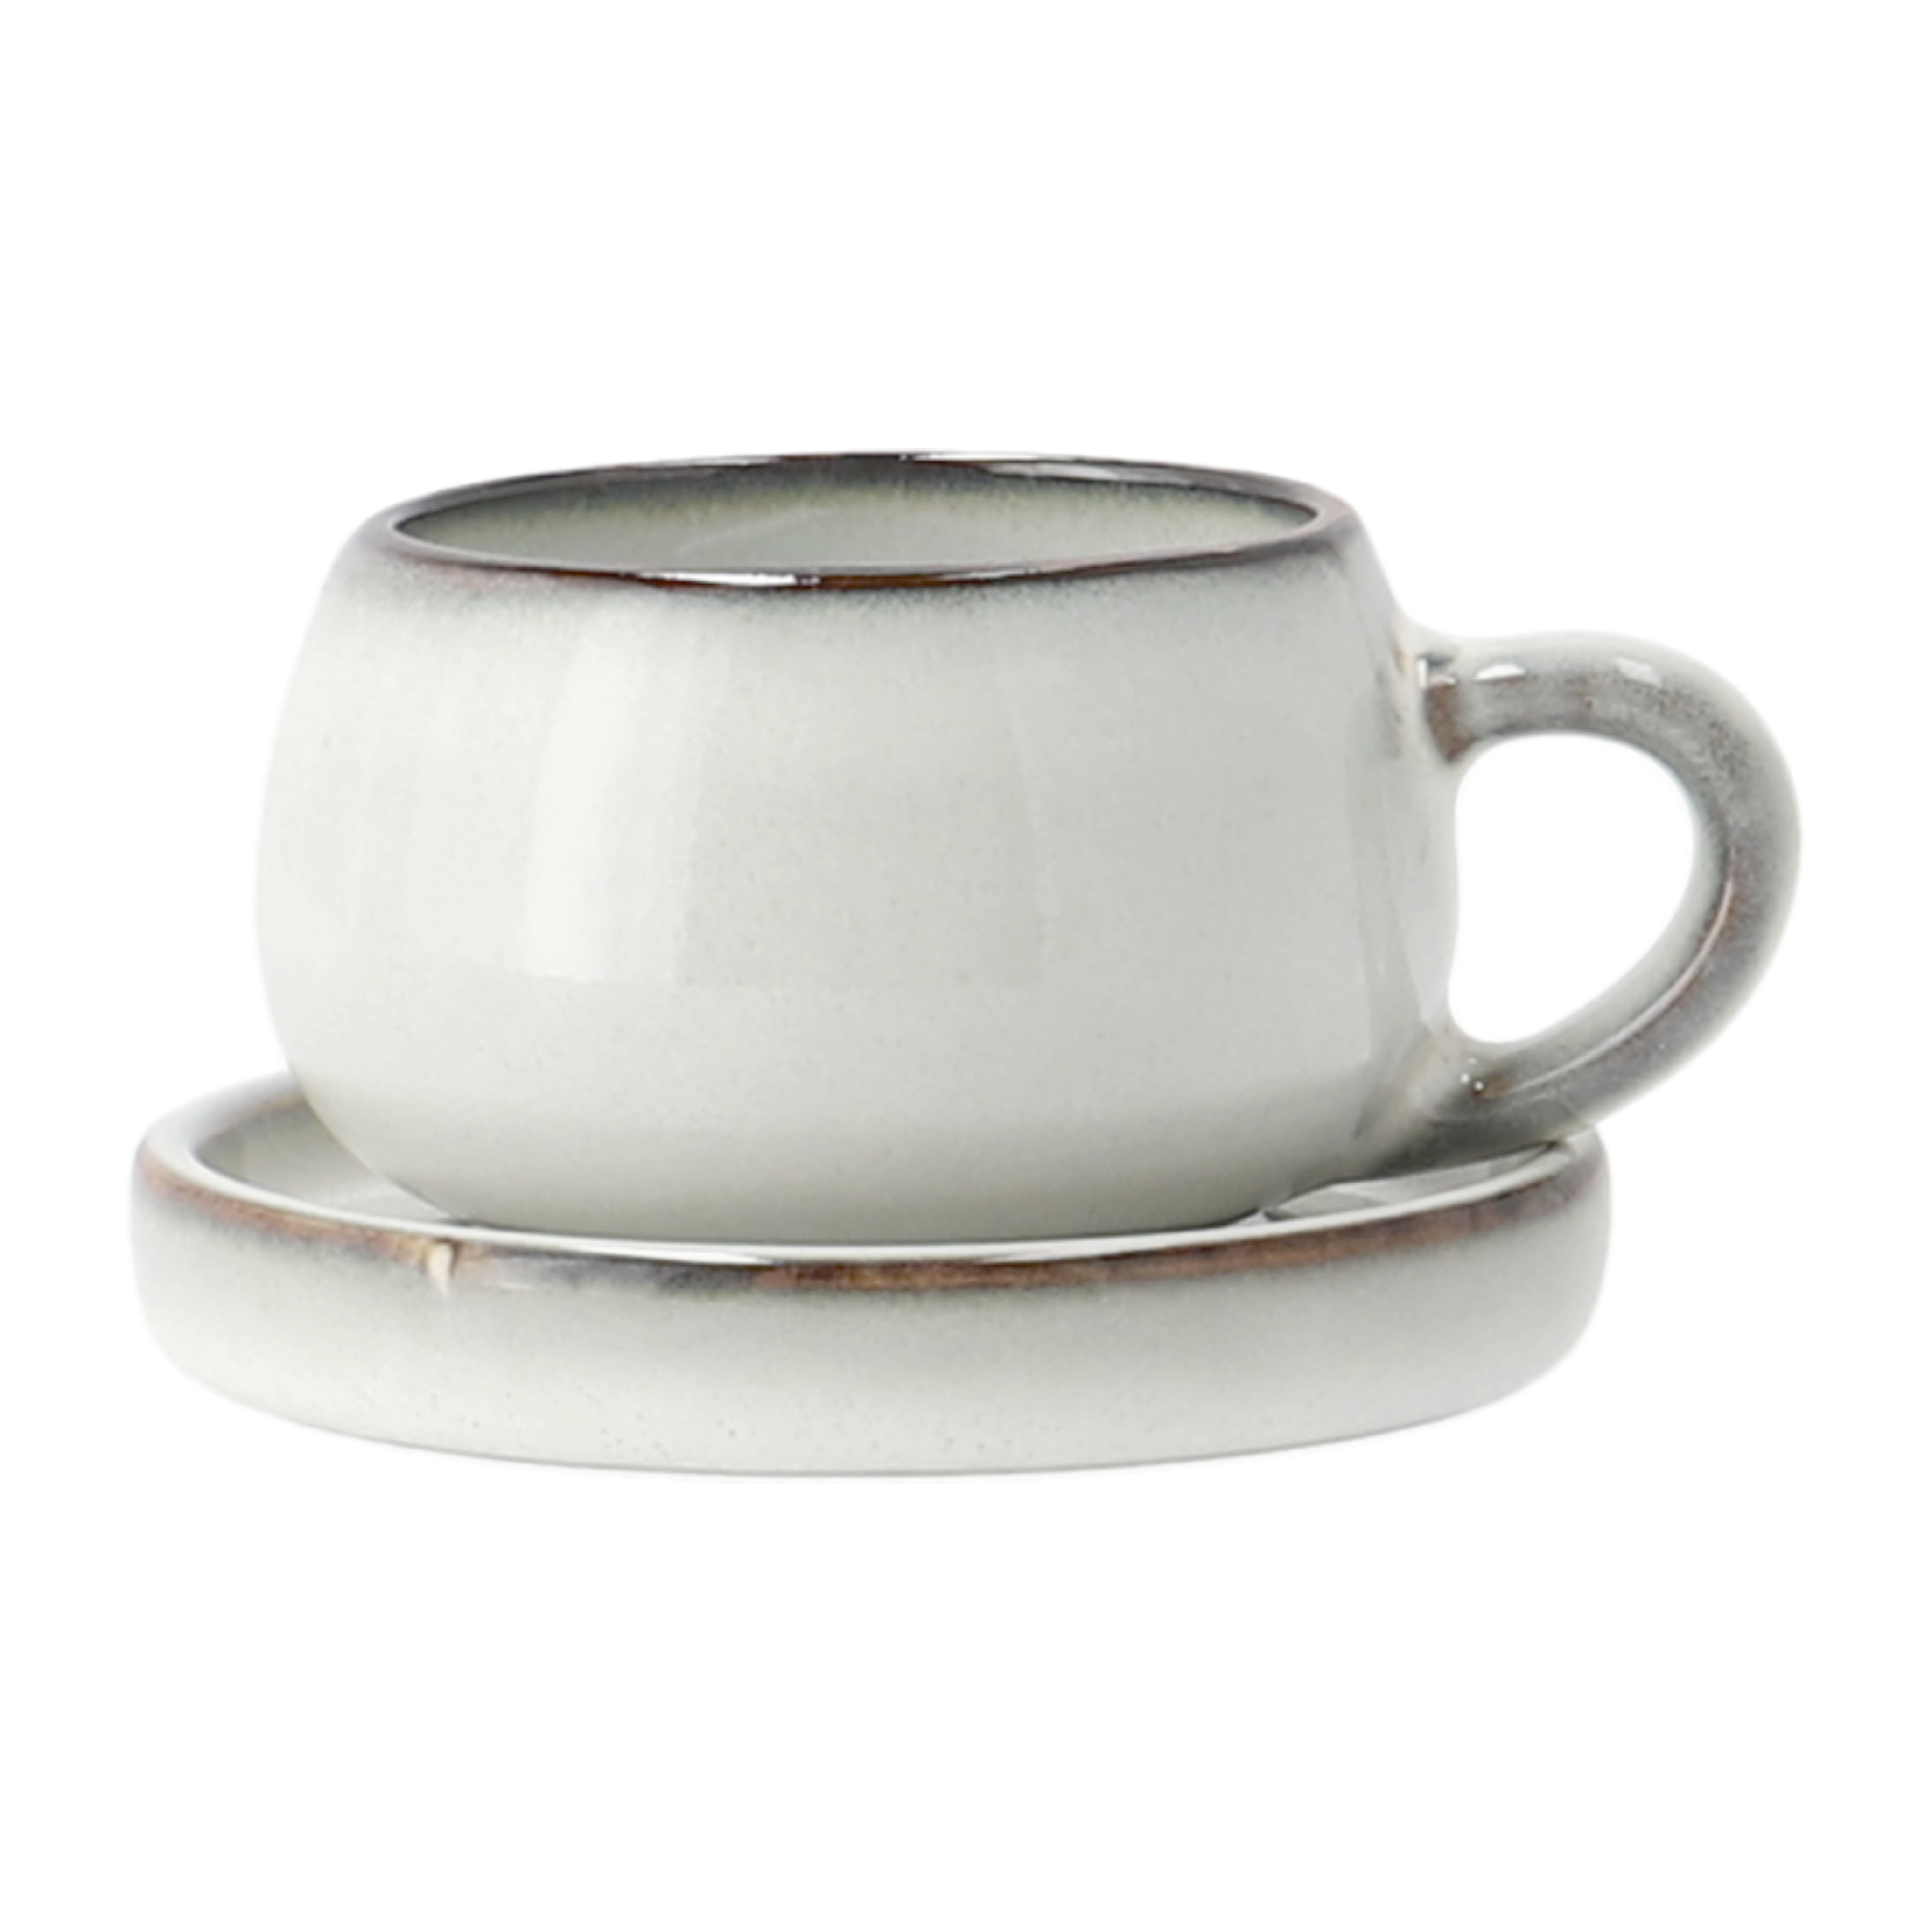 https://www.nordicnest.com/assets/blobs/lene-bjerre-amera-espressocup-with-saucer-white-sands/43690-02_1_ProductImageMain-8330213e5d.png